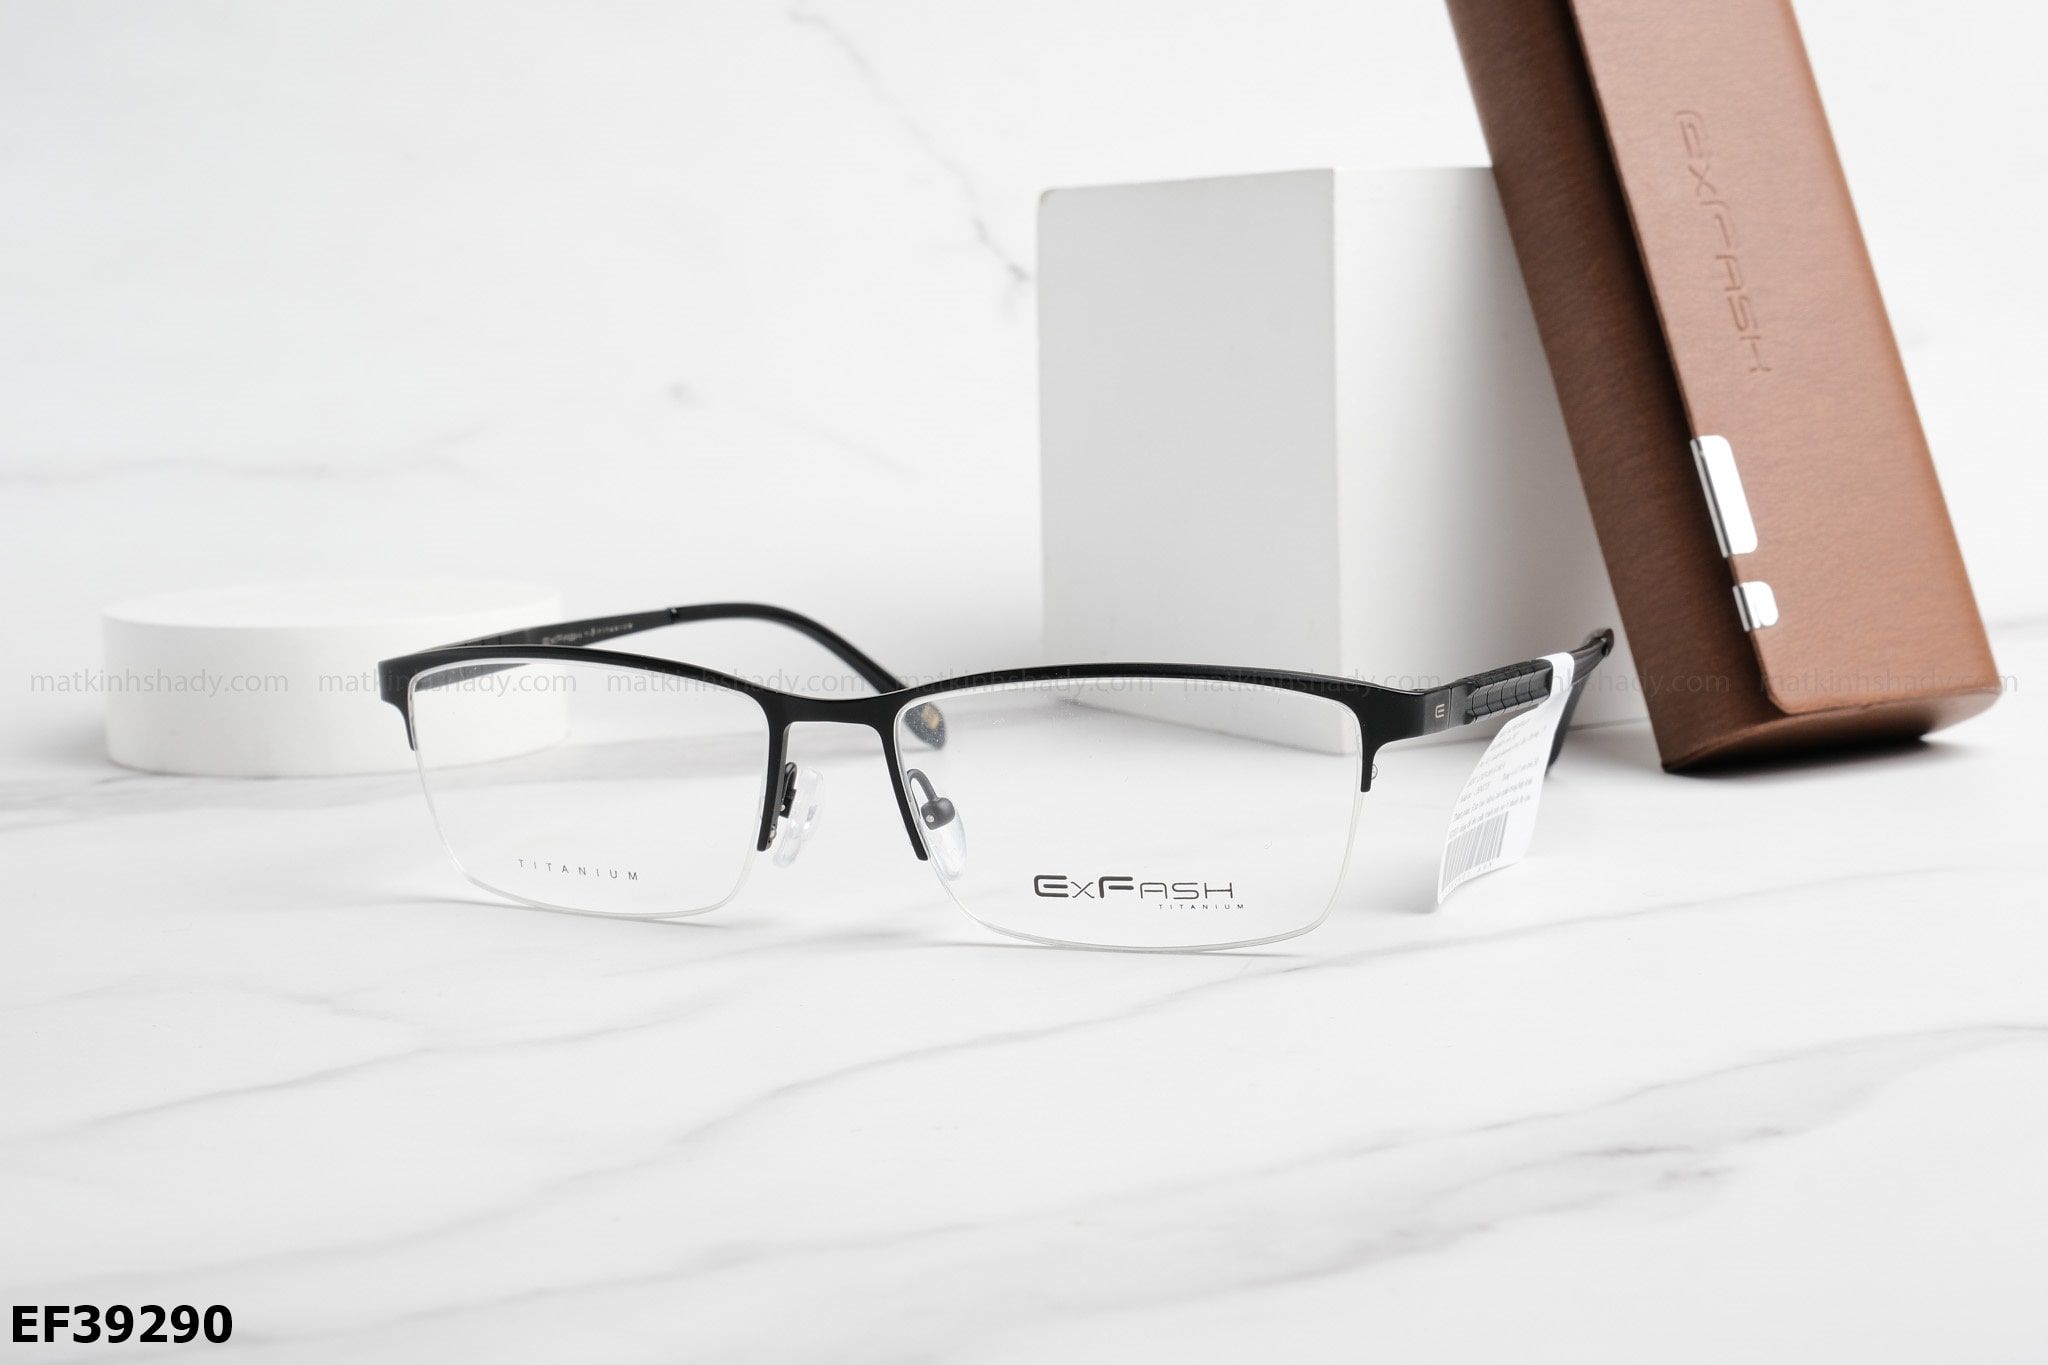  Exfash Eyewear - Glasses - EF39290 